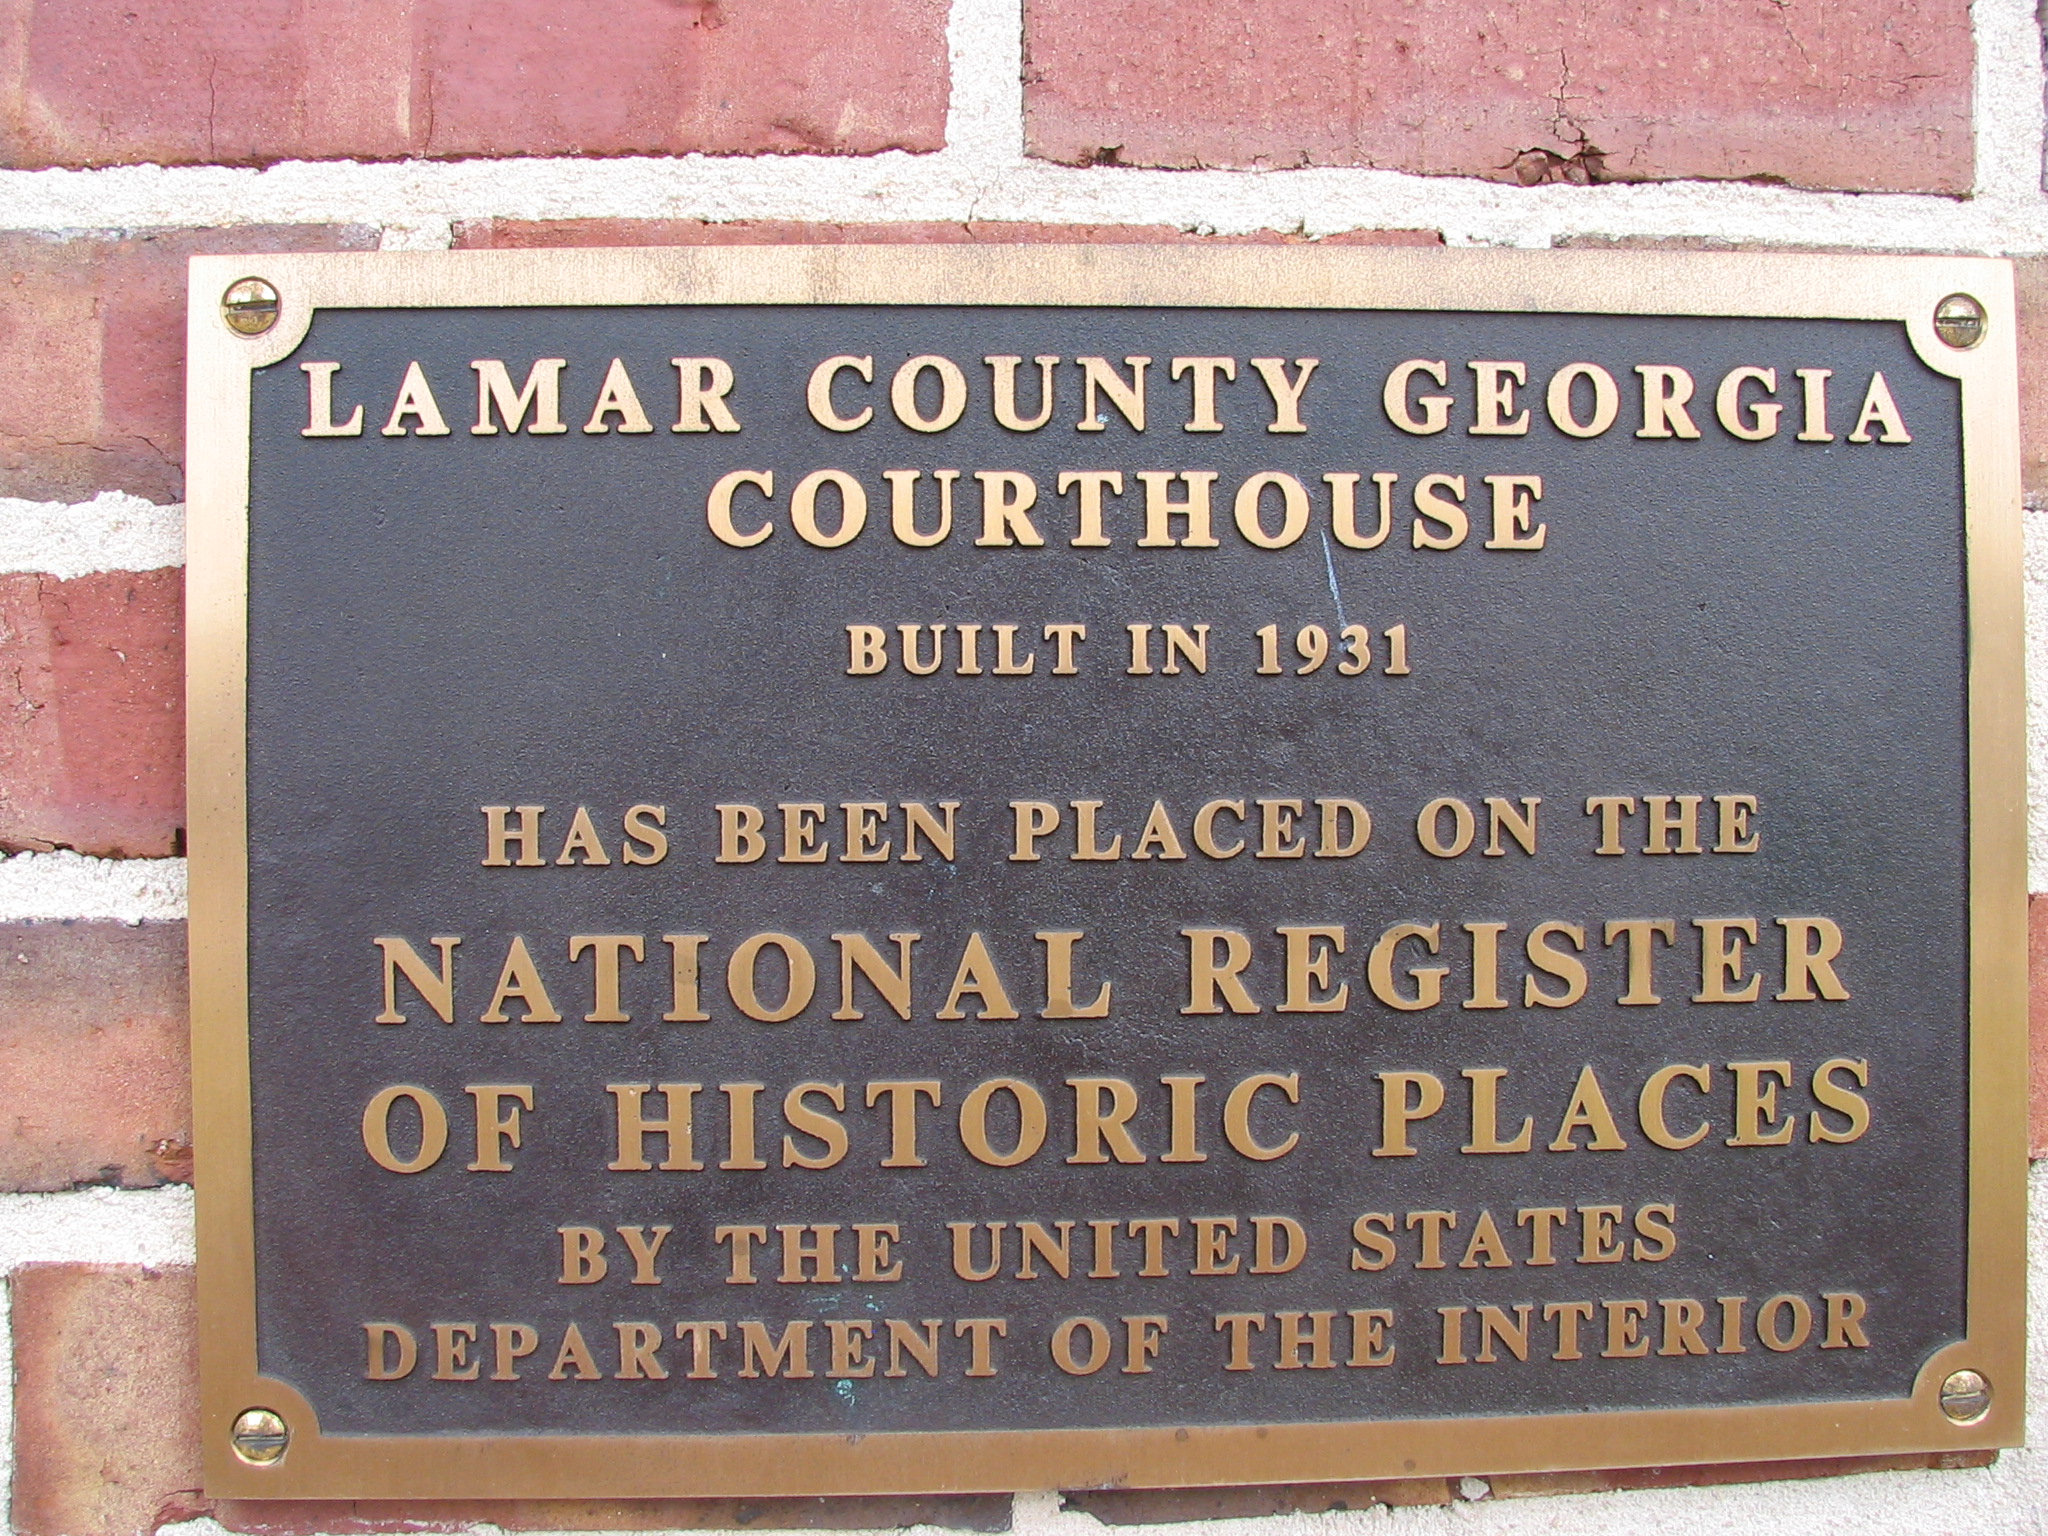 Lamar County Courthouse, Barnesville GA | Flickr - Photo ...